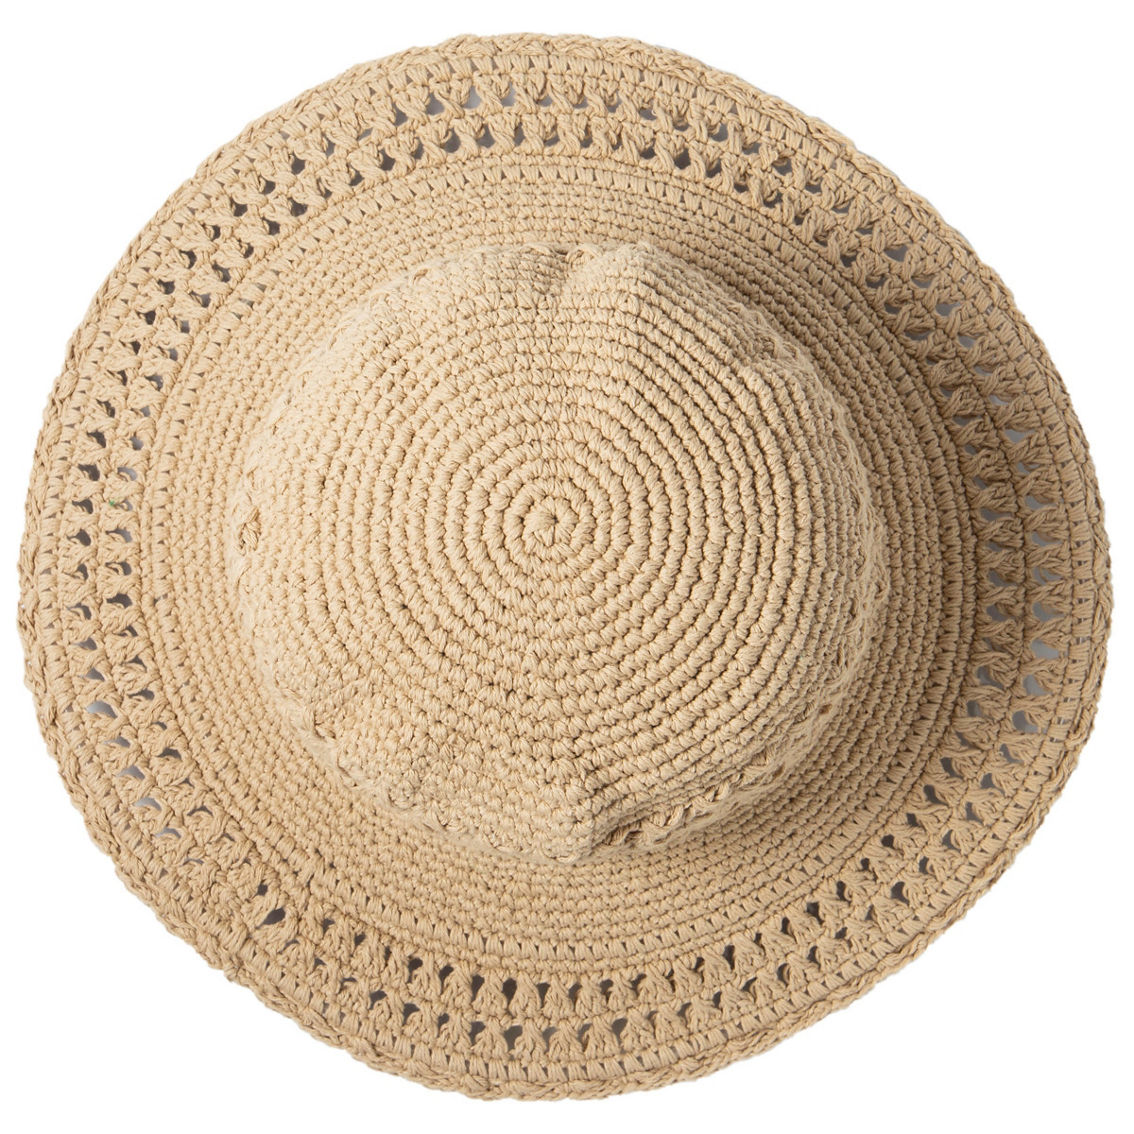 San Diego Hat Company Womens Crochet Hat - Image 3 of 4